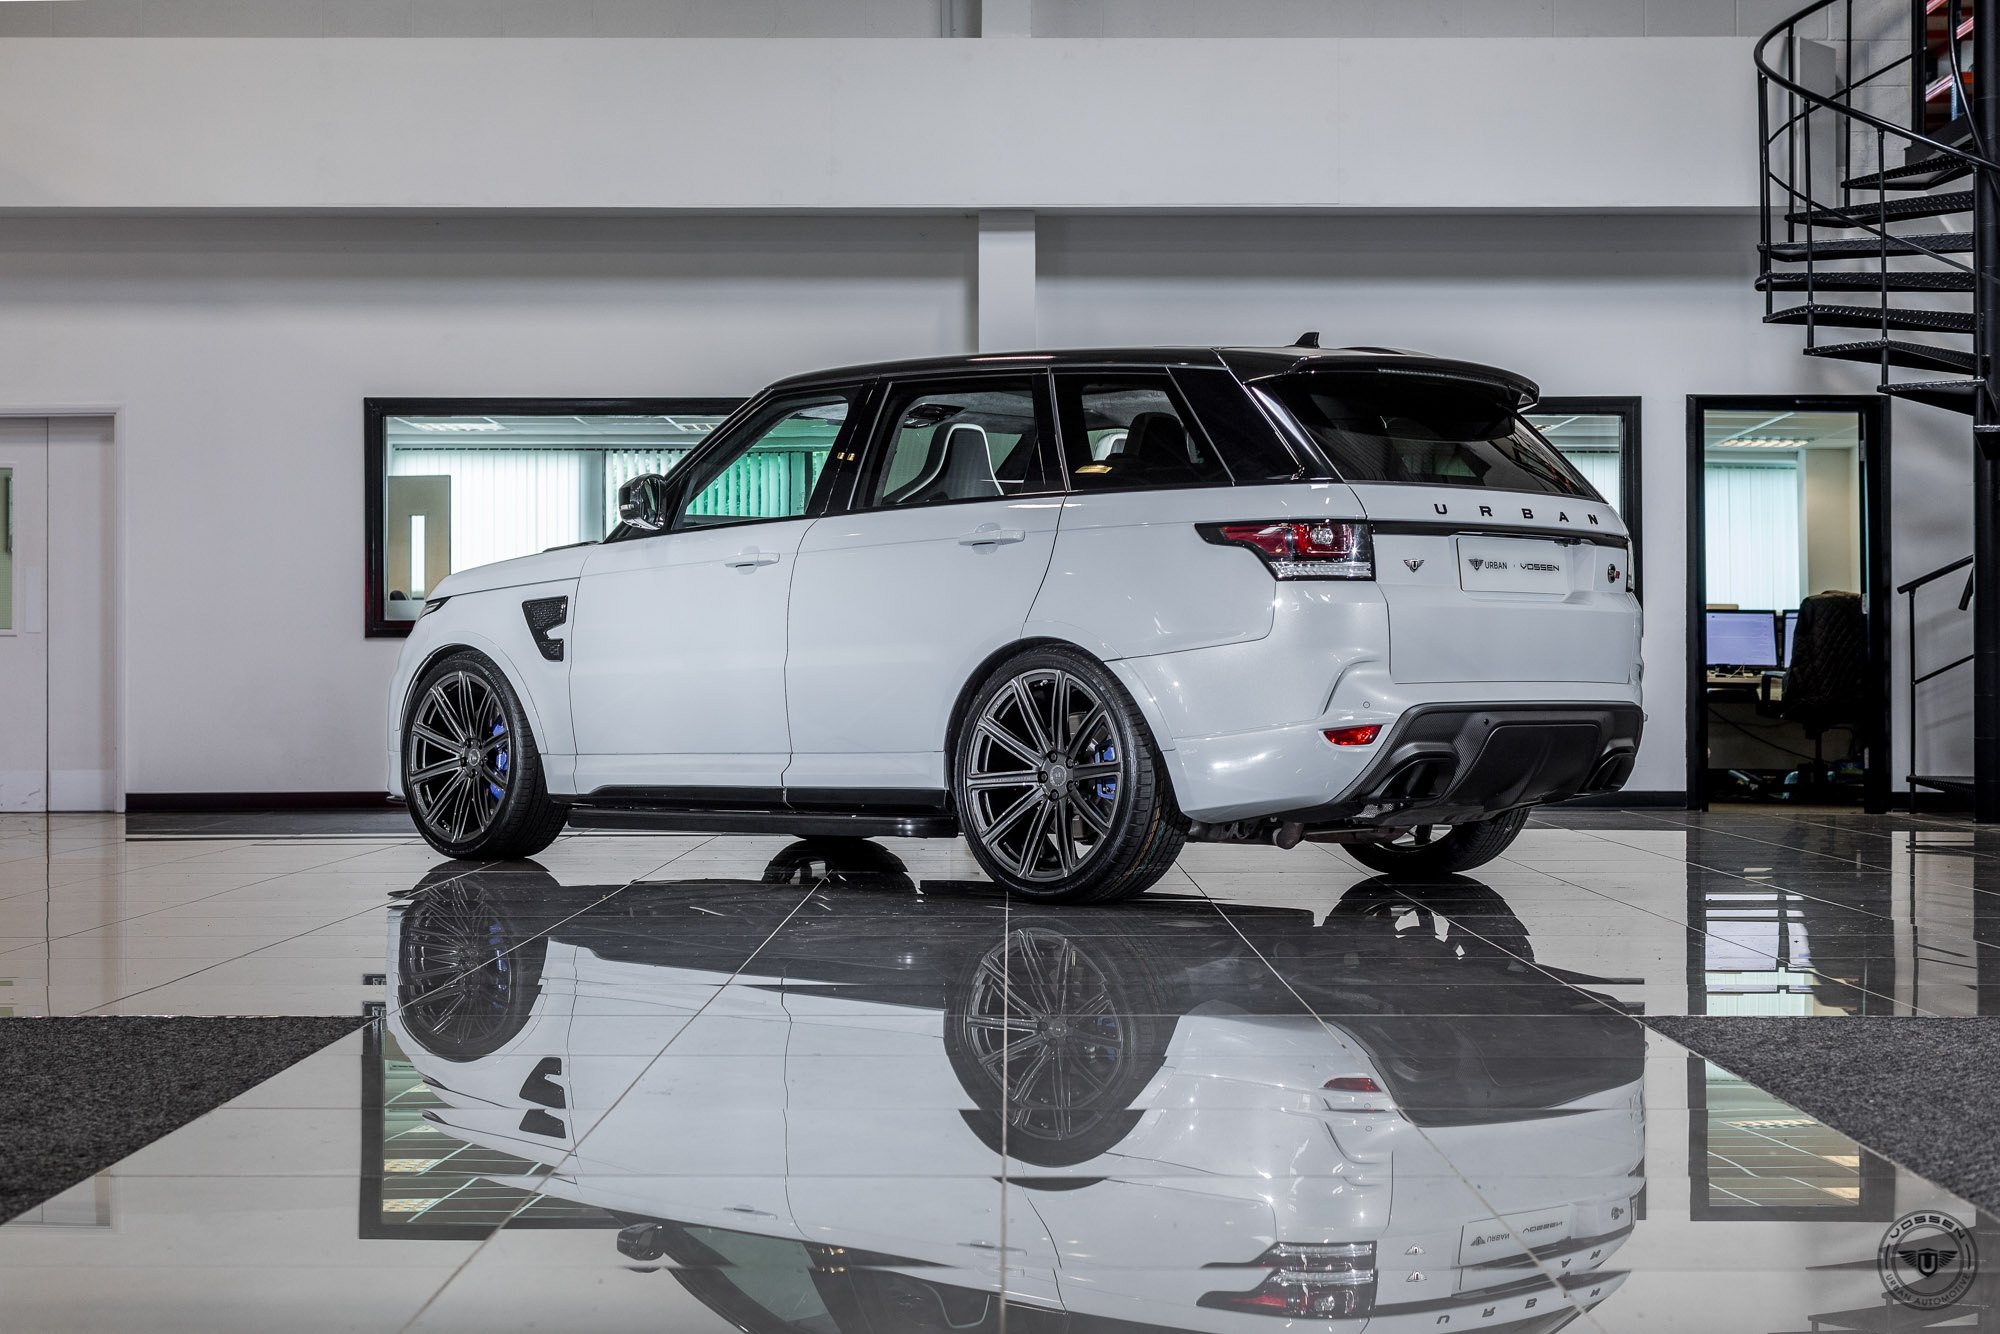 Carbon Fiber Rear Diffuser on White Range Rover Sport - Photo by Vossen